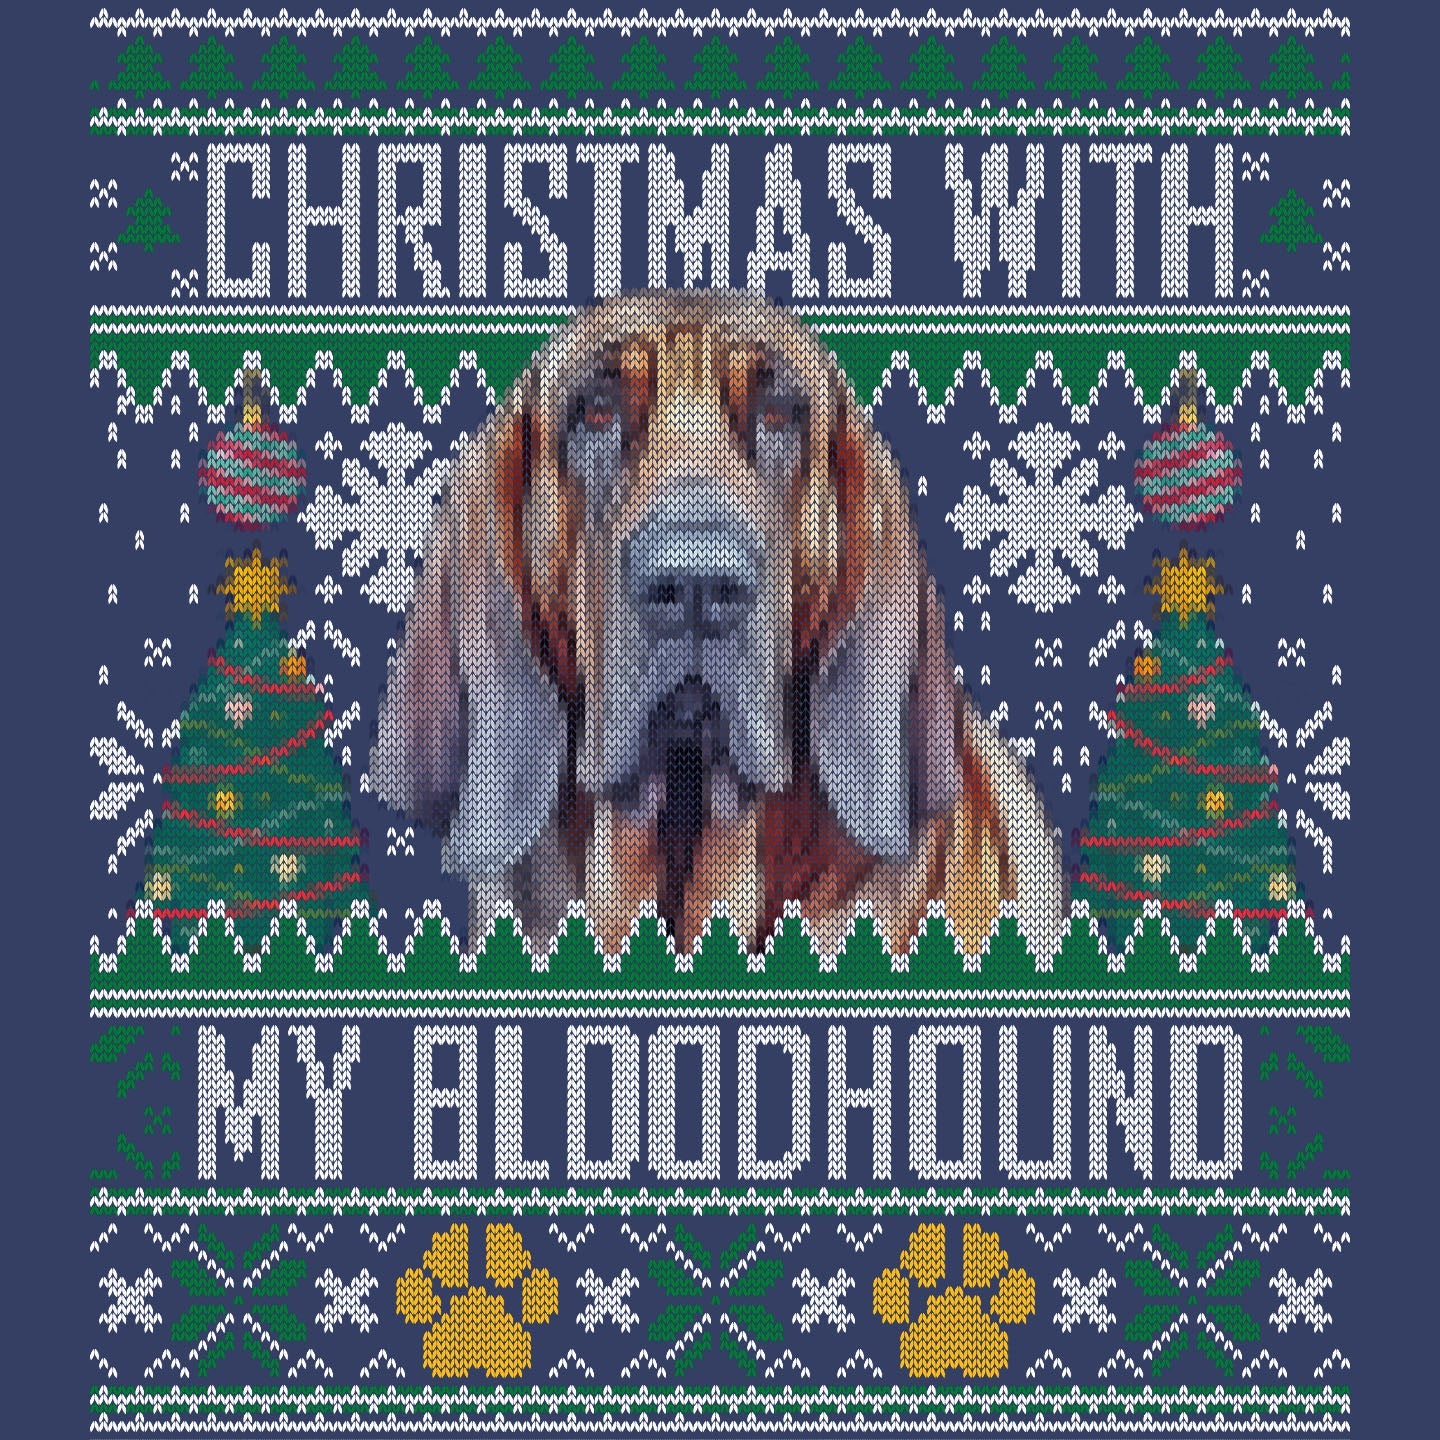 Ugly Sweater Christmas with My Bloodhound - Adult Unisex Crewneck Sweatshirt